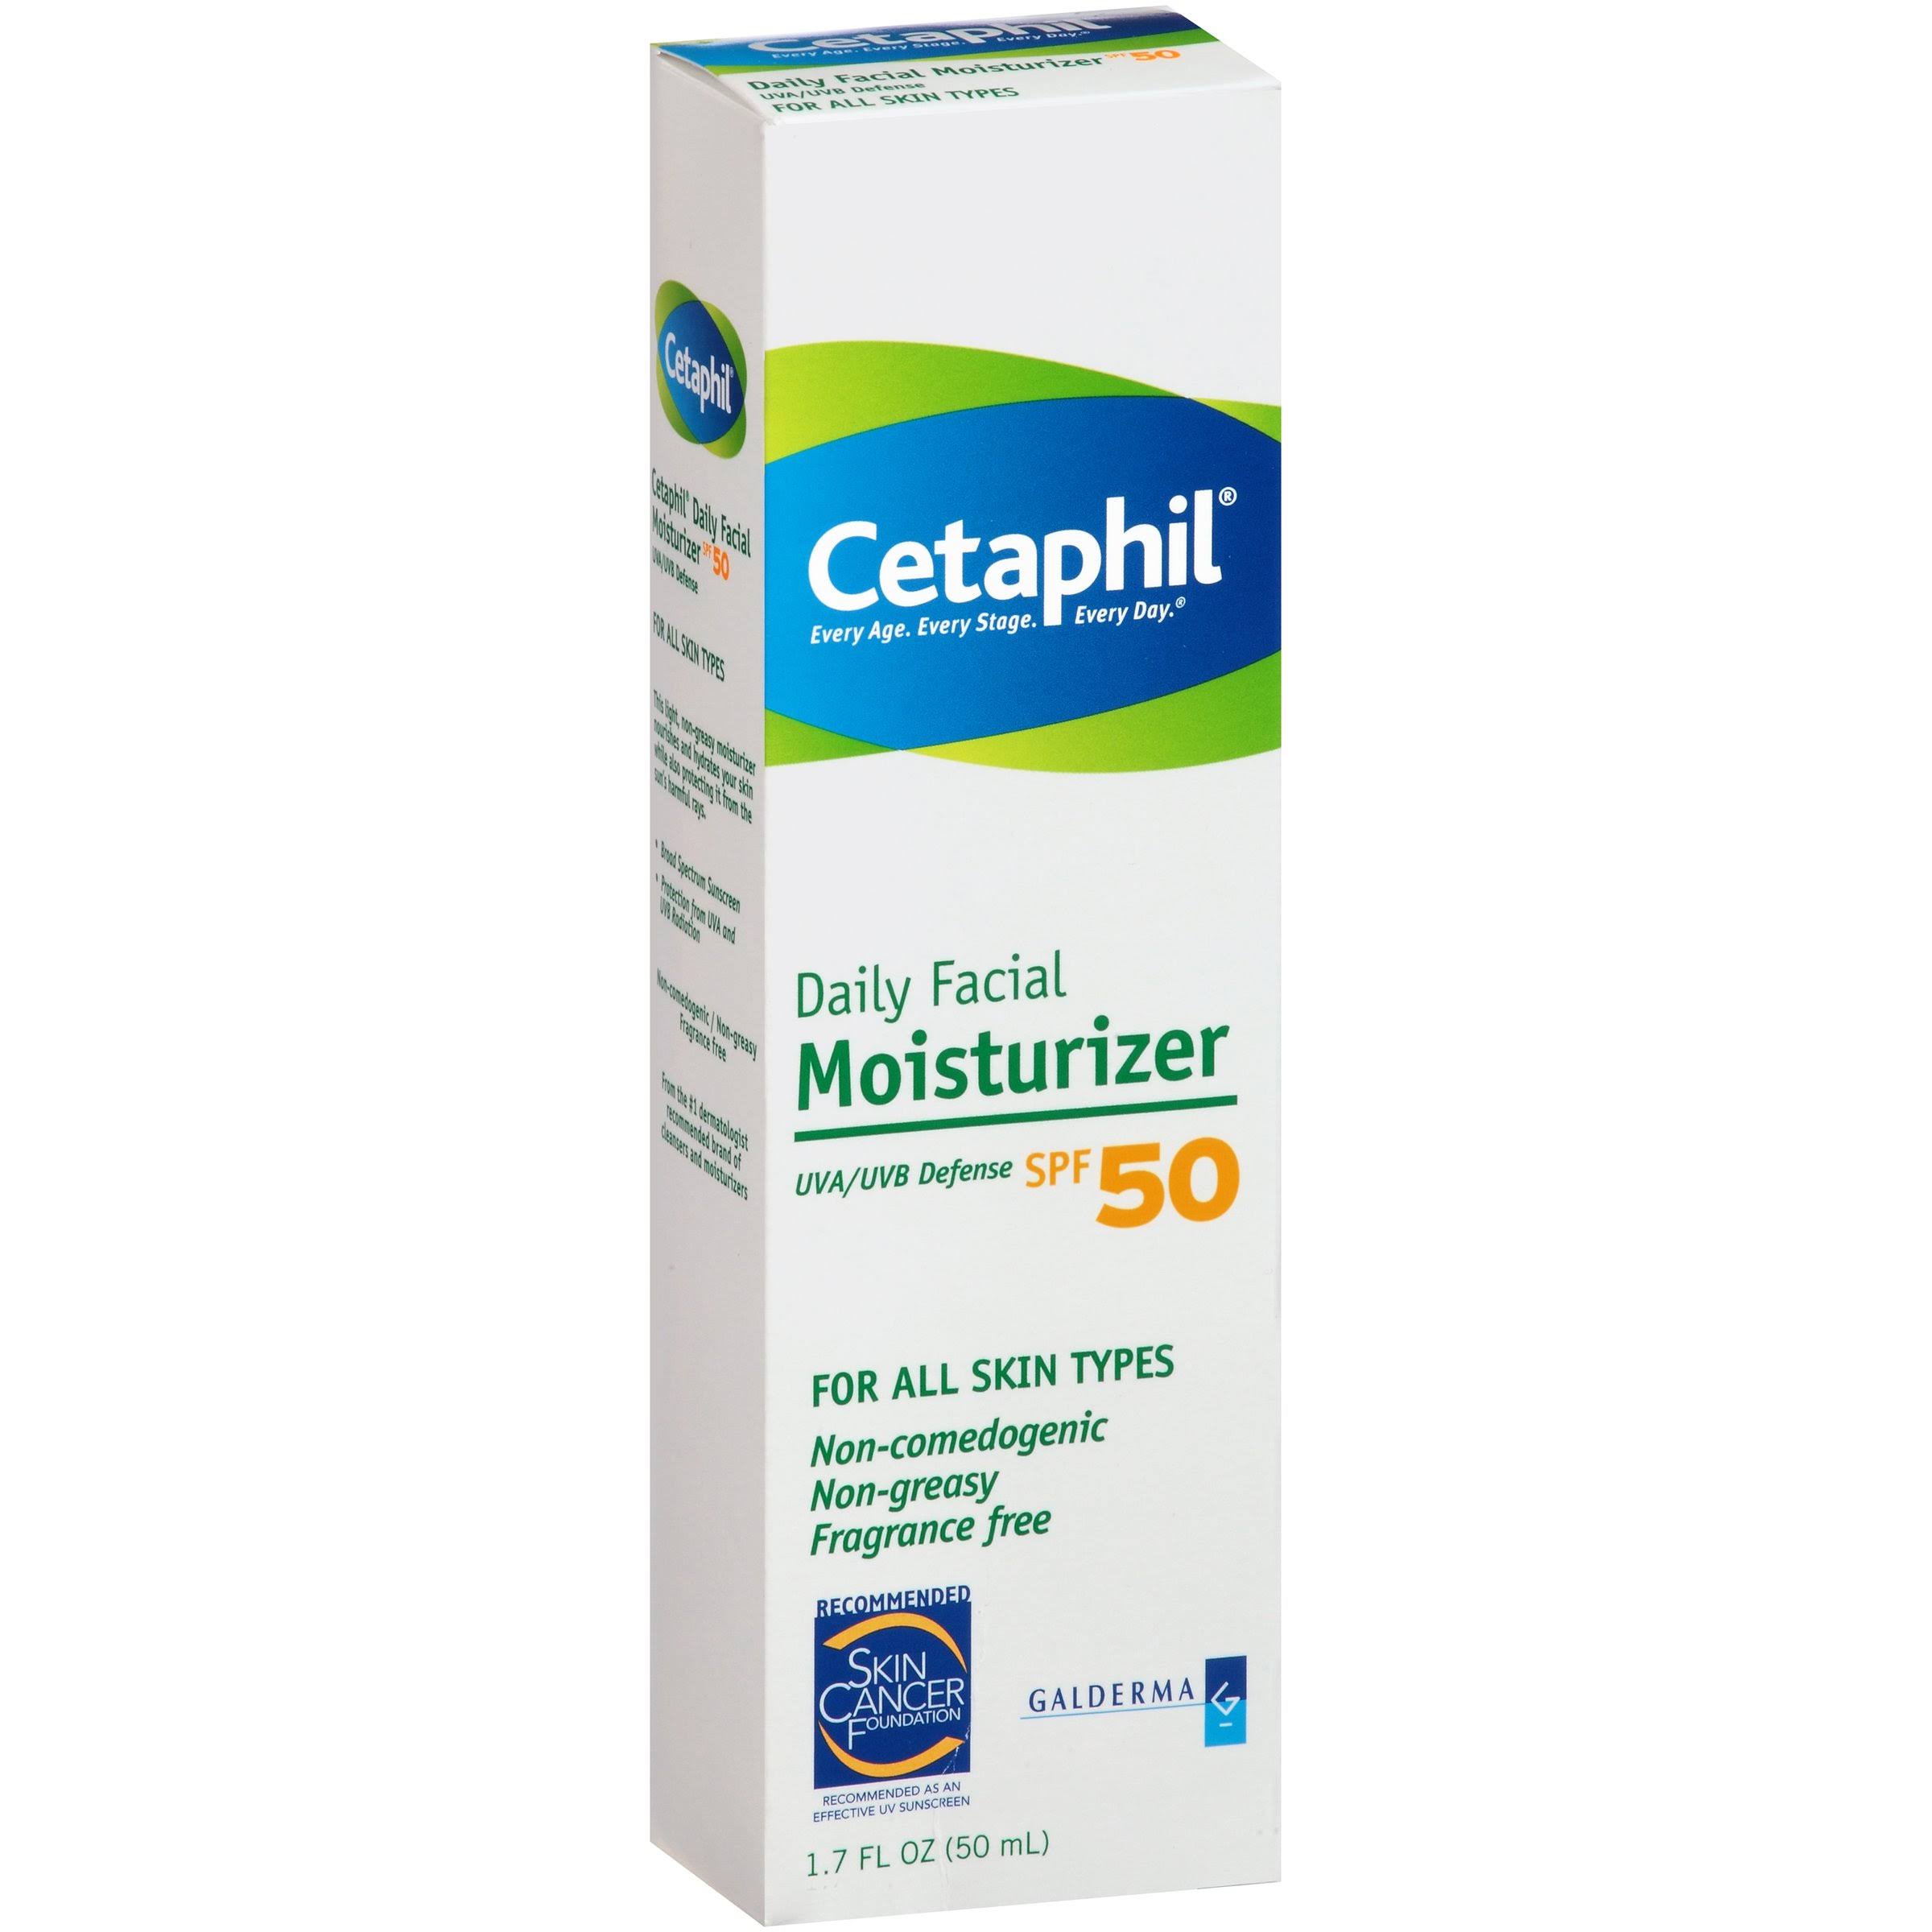 Cetaphil Daily Facial Moisturizer with Sunscreen - SPF 50 Plus, 1.7oz